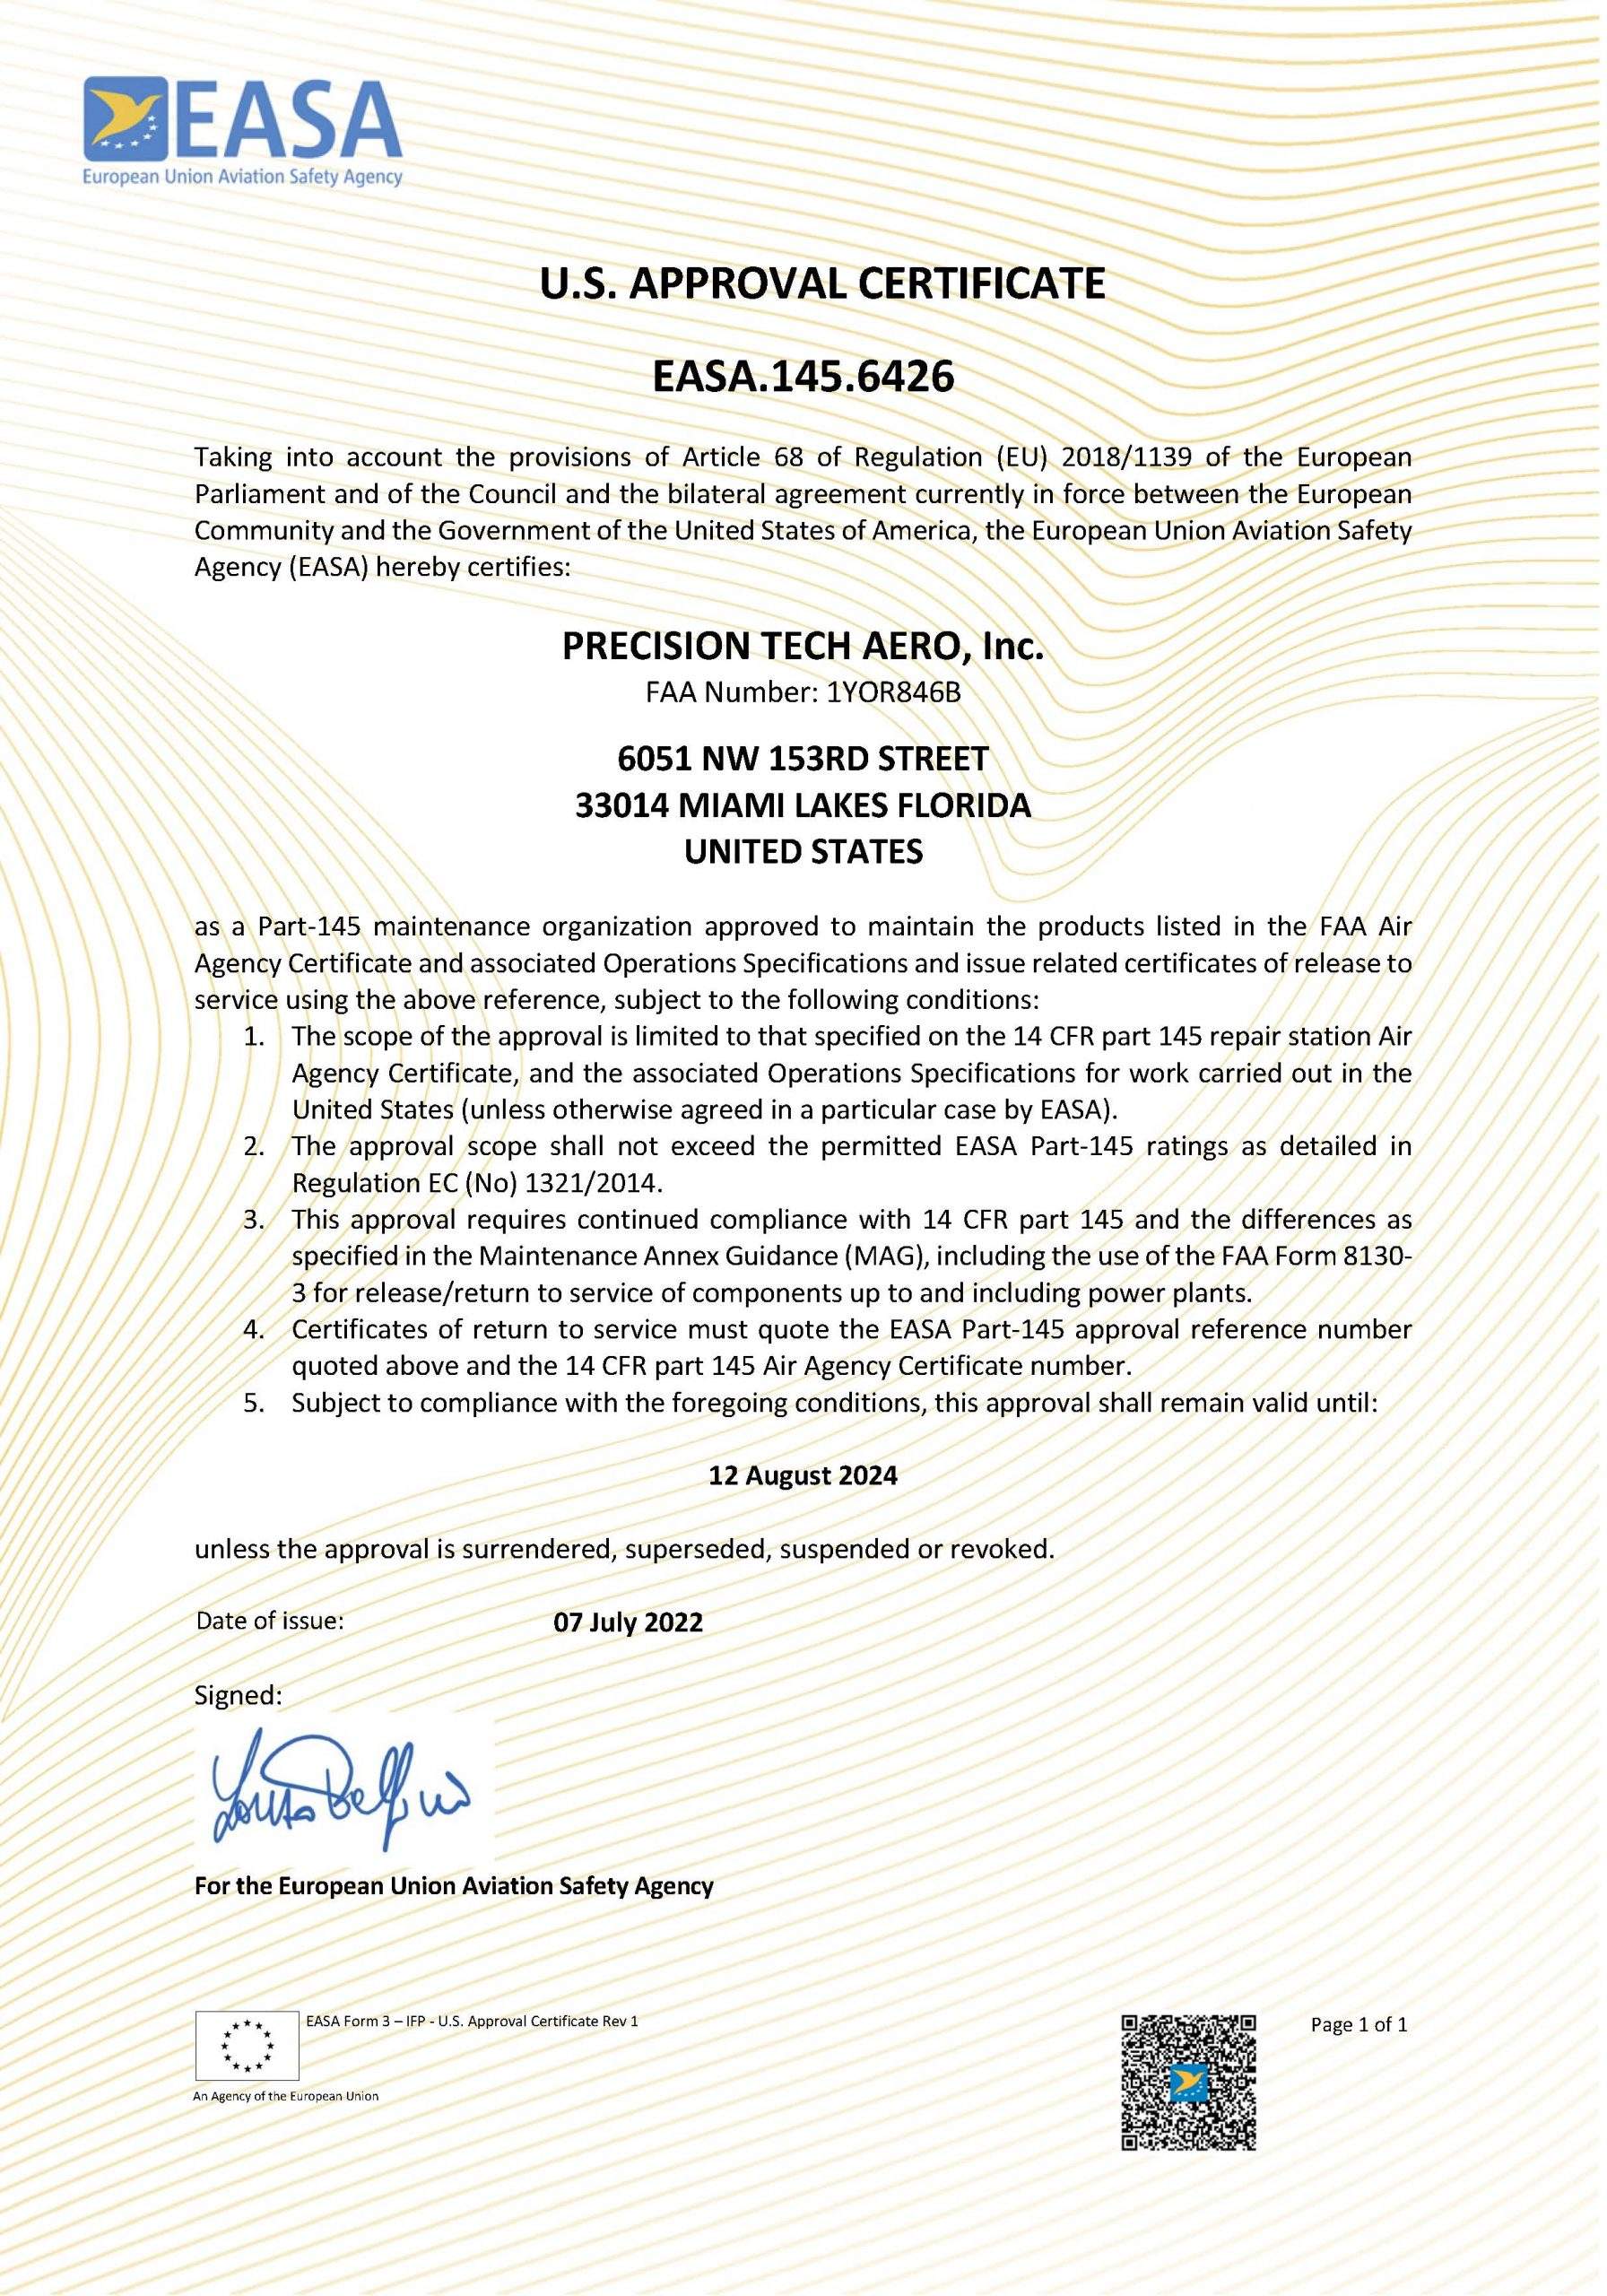 Precision Tech Aero Certificate EASA-2024